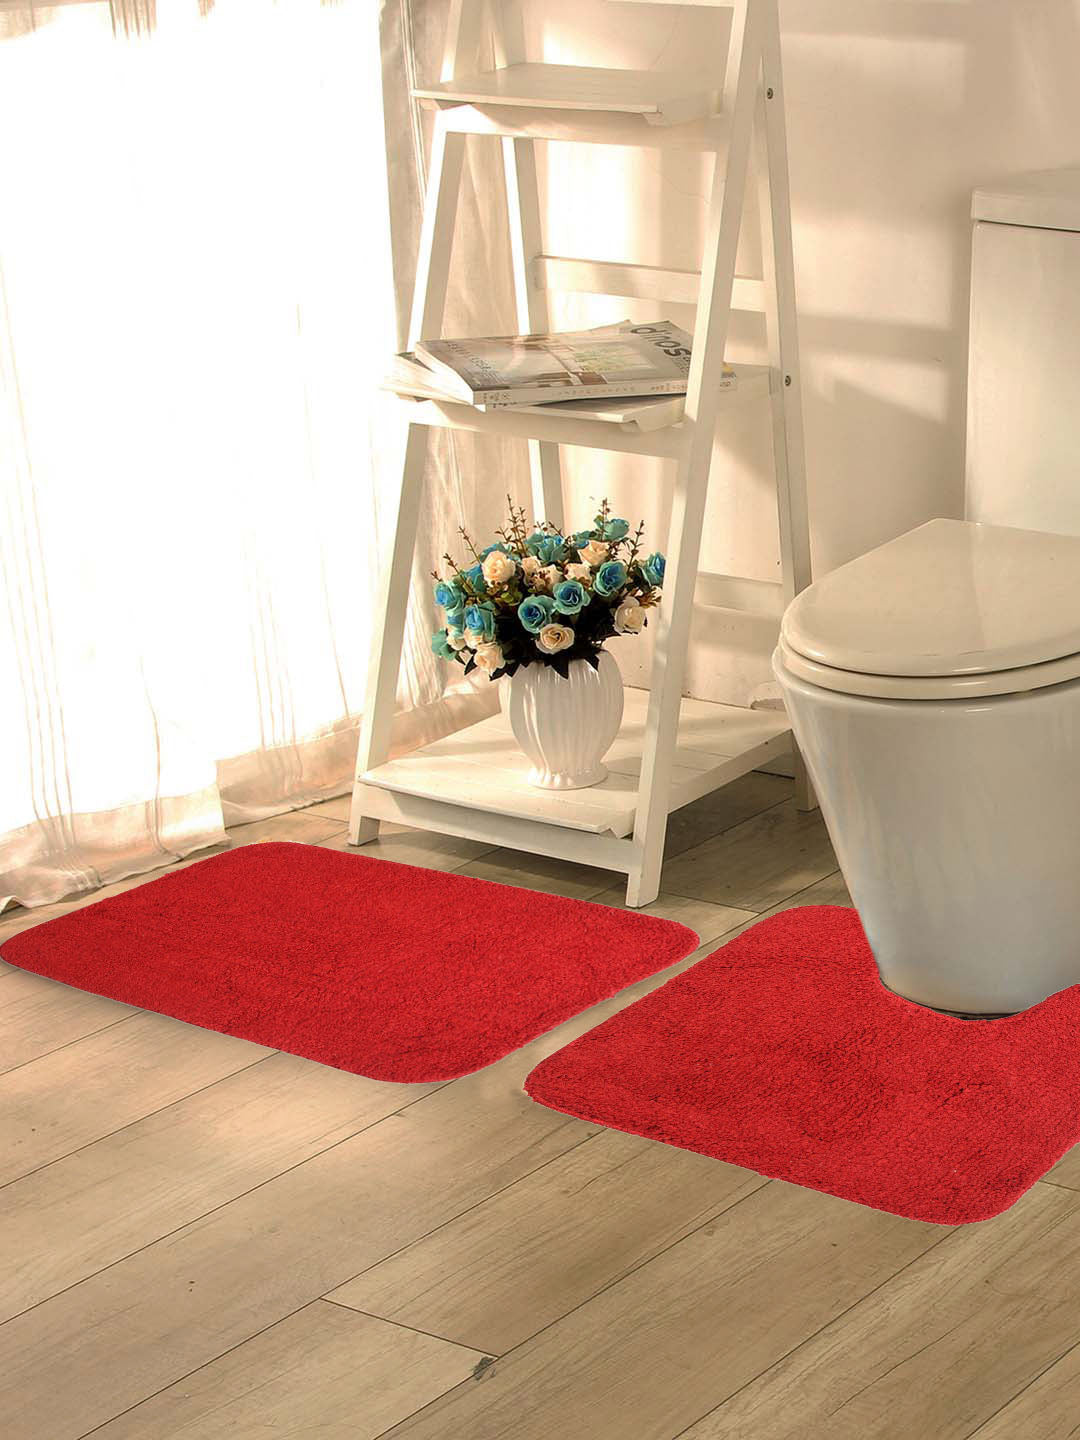 Lushomes Bathroom Mat, 1800 GSM Floor Mat with High Pile Microfiber, anti skid mat for bathroom floor with Contour footmat (Bathmat Size 19 x 30 Inch, Contour Size 19 x 19 Inch, Single Pc, Maroon)